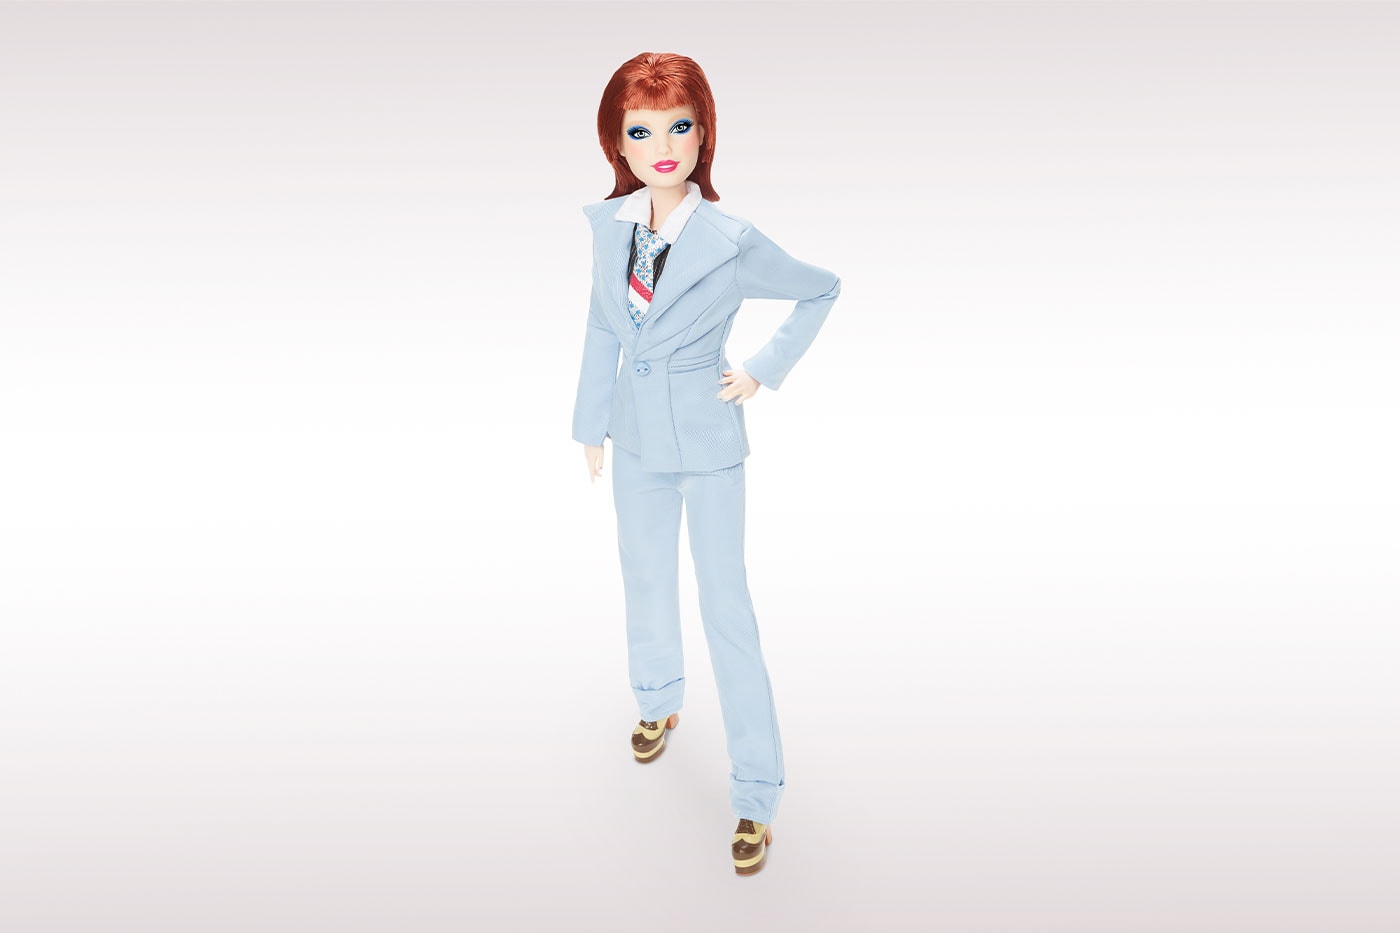 David Bowie hunky dory Barbie Doll Release Info